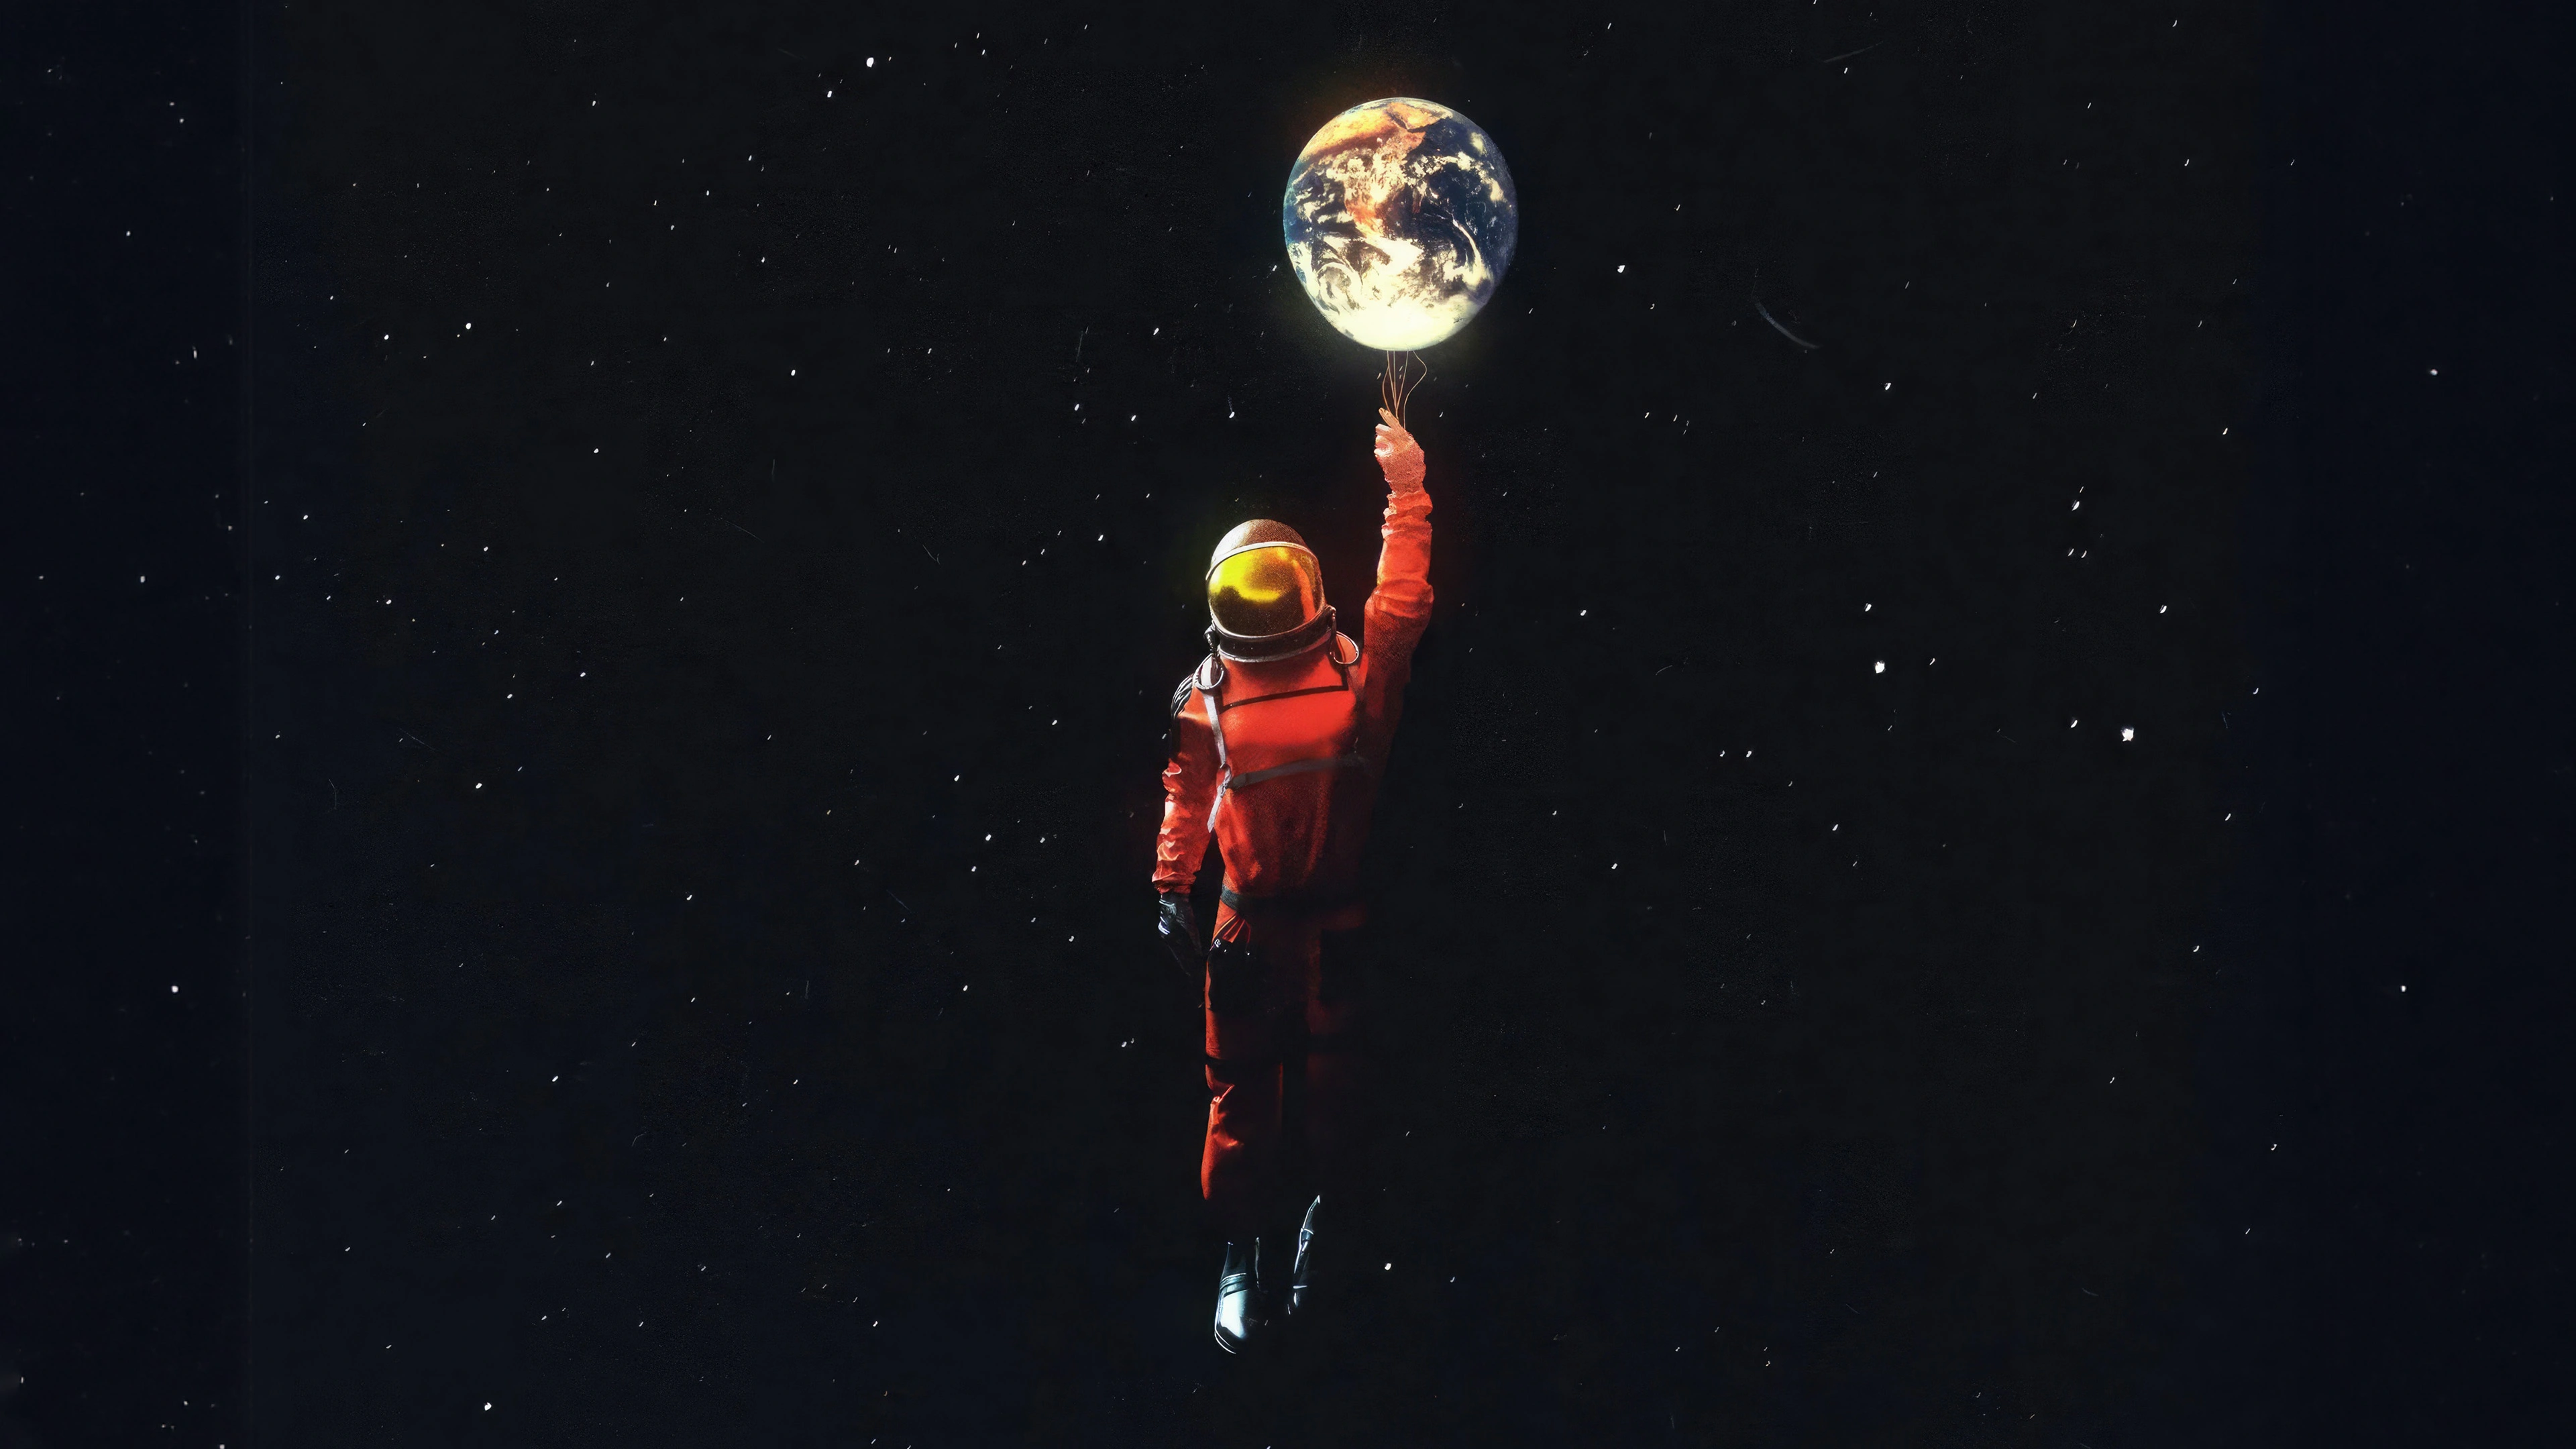 elevating dreams astronaut balloon ascension 29.jpg